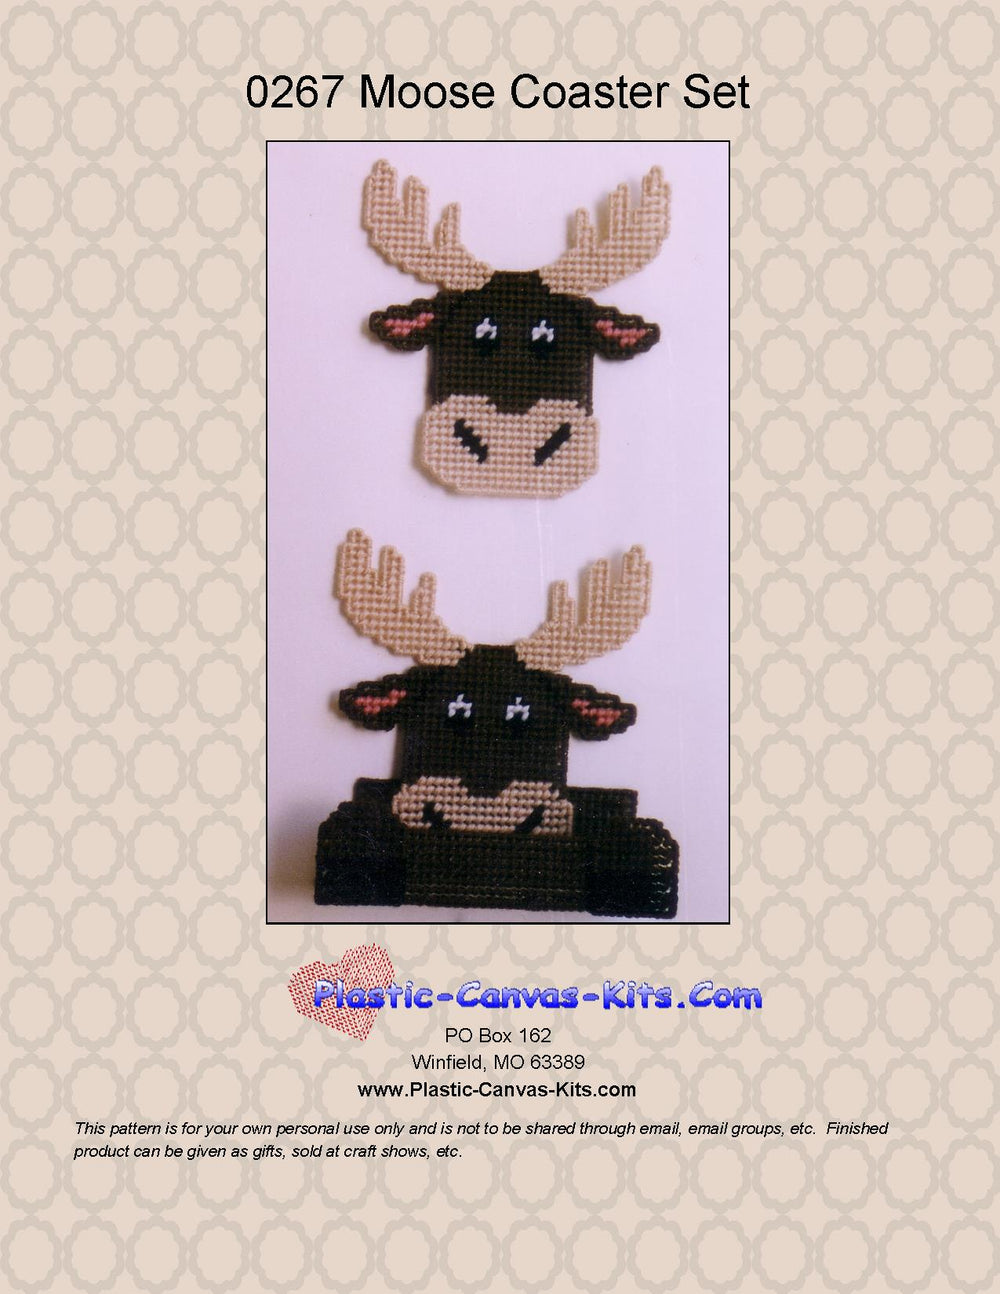 Moose Coaster Set